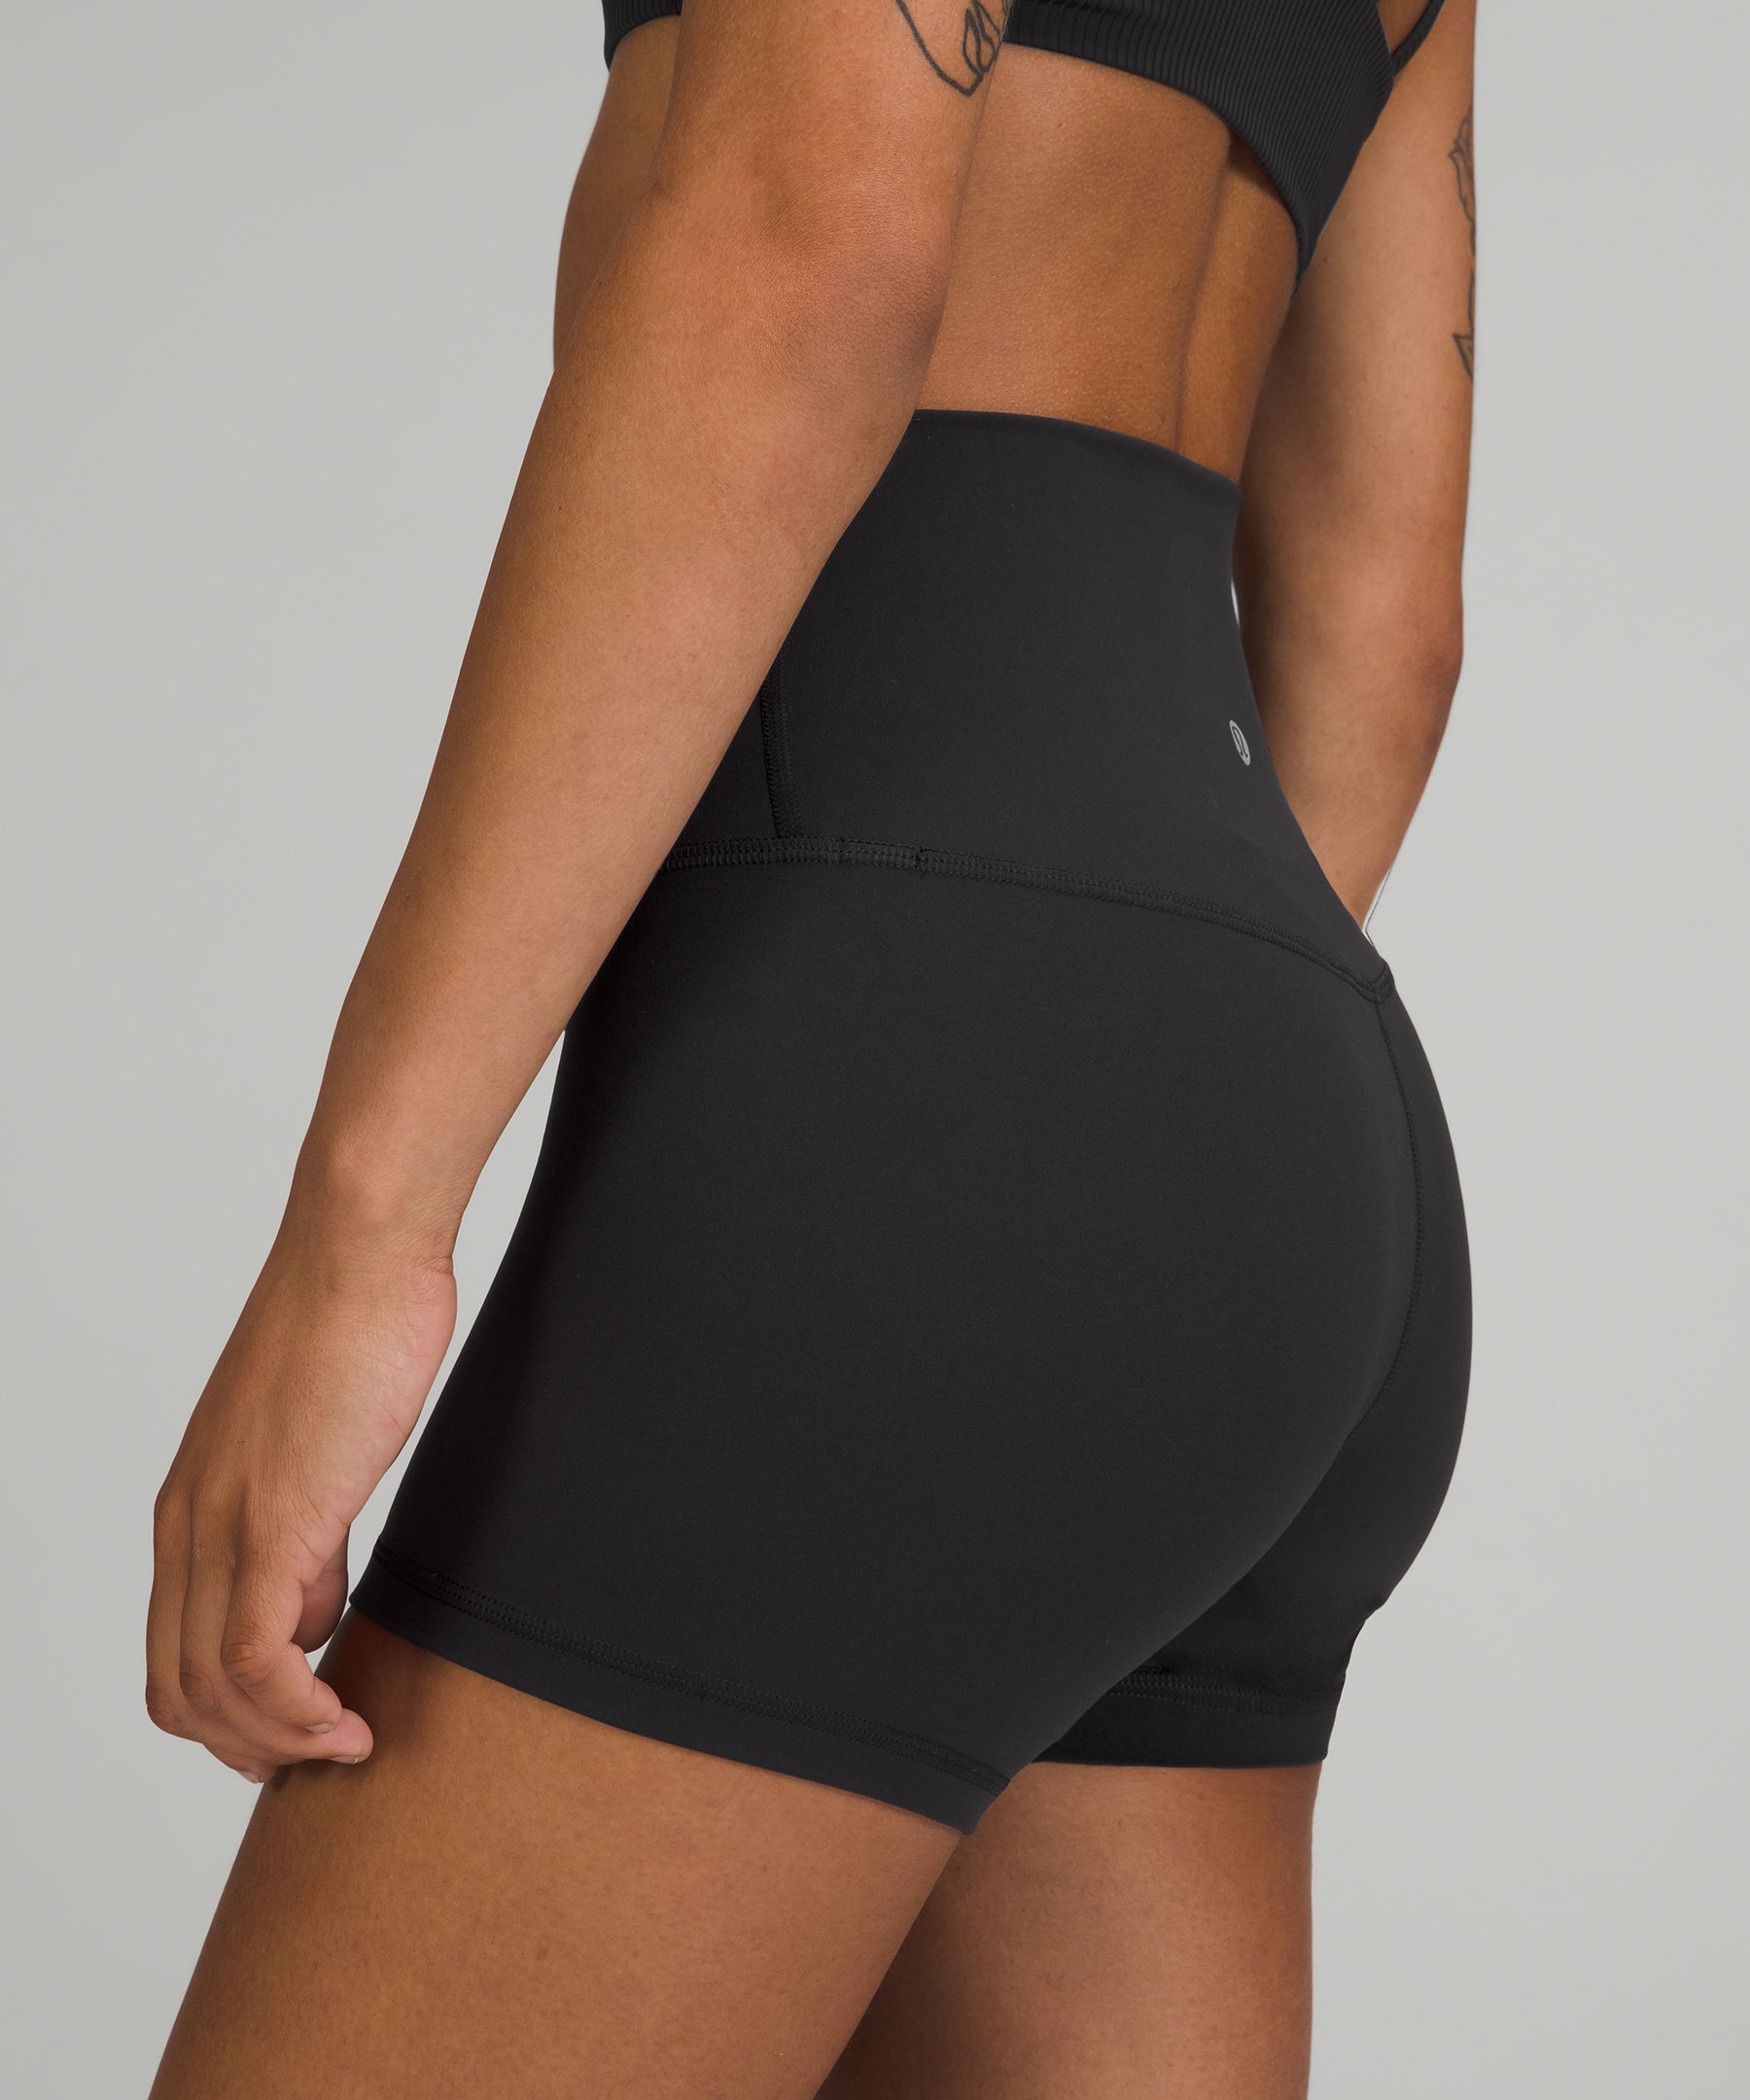 Lululemon Compression 4 inch Shorts Black Reversible Women's Size 4